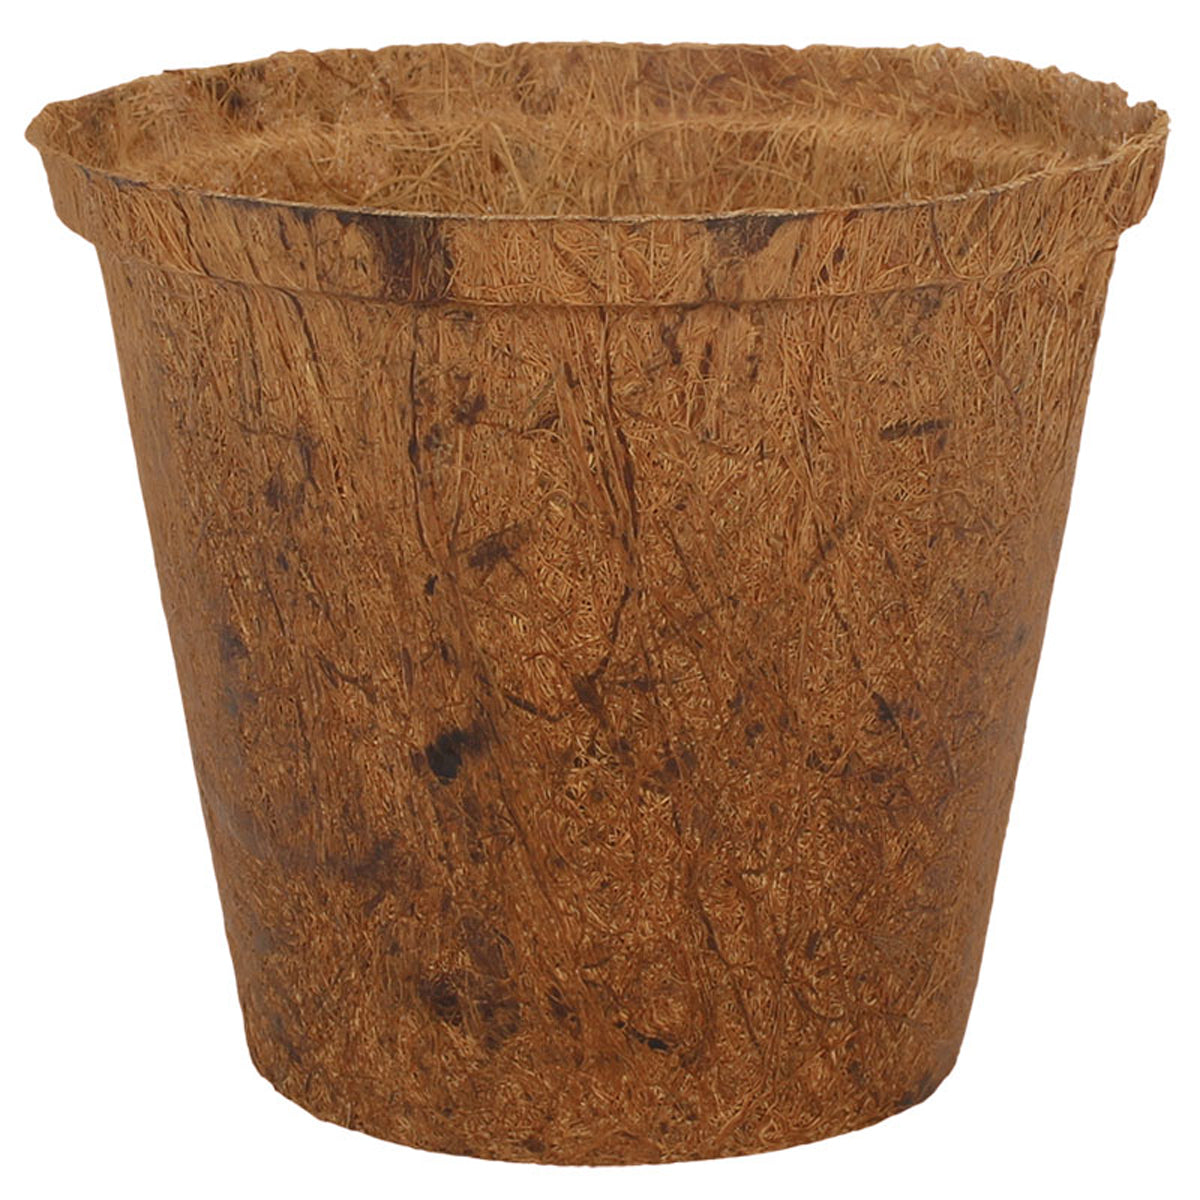 Biodegradable Coco Coir 3" Pot